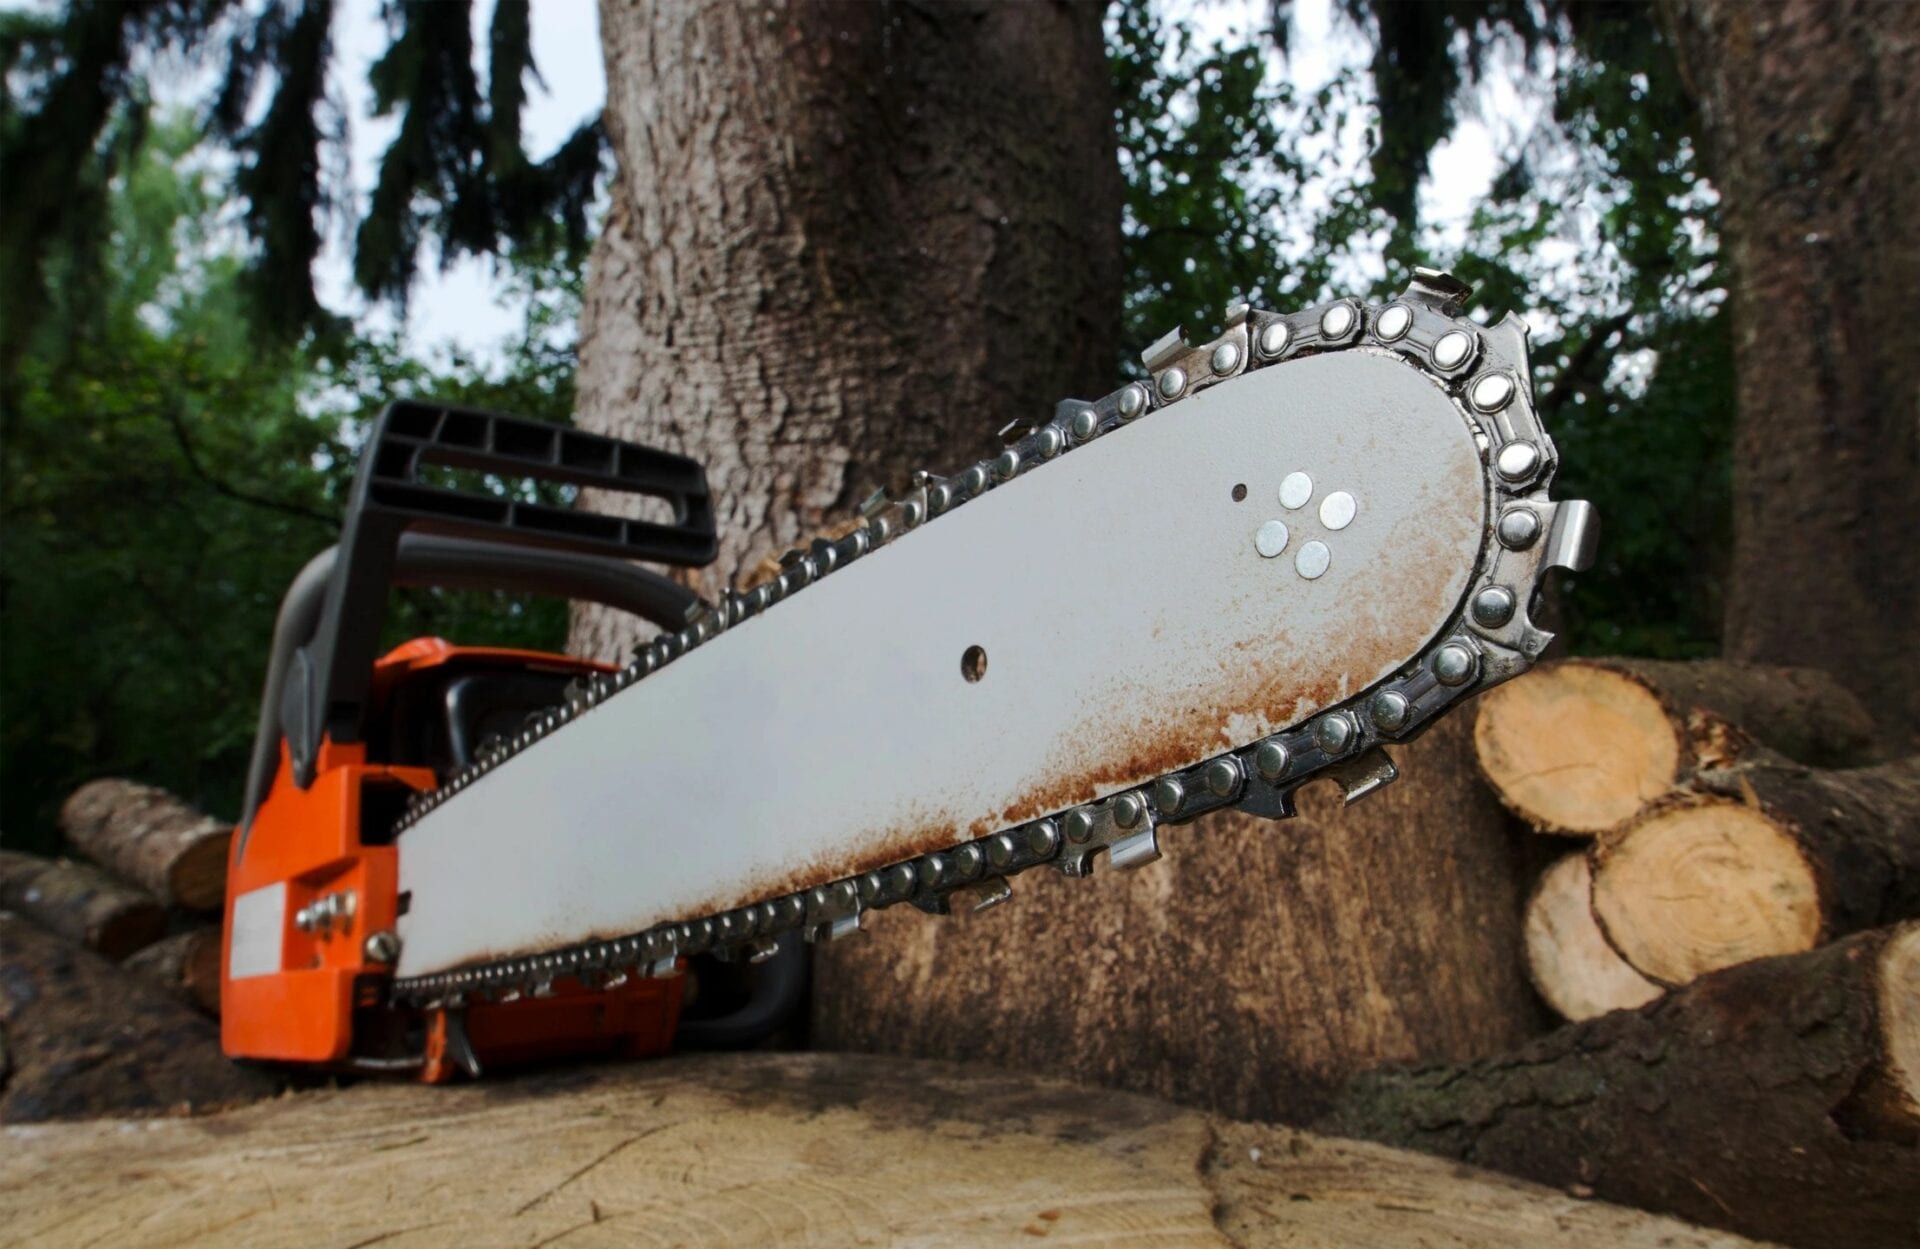 Woody's Tree Service